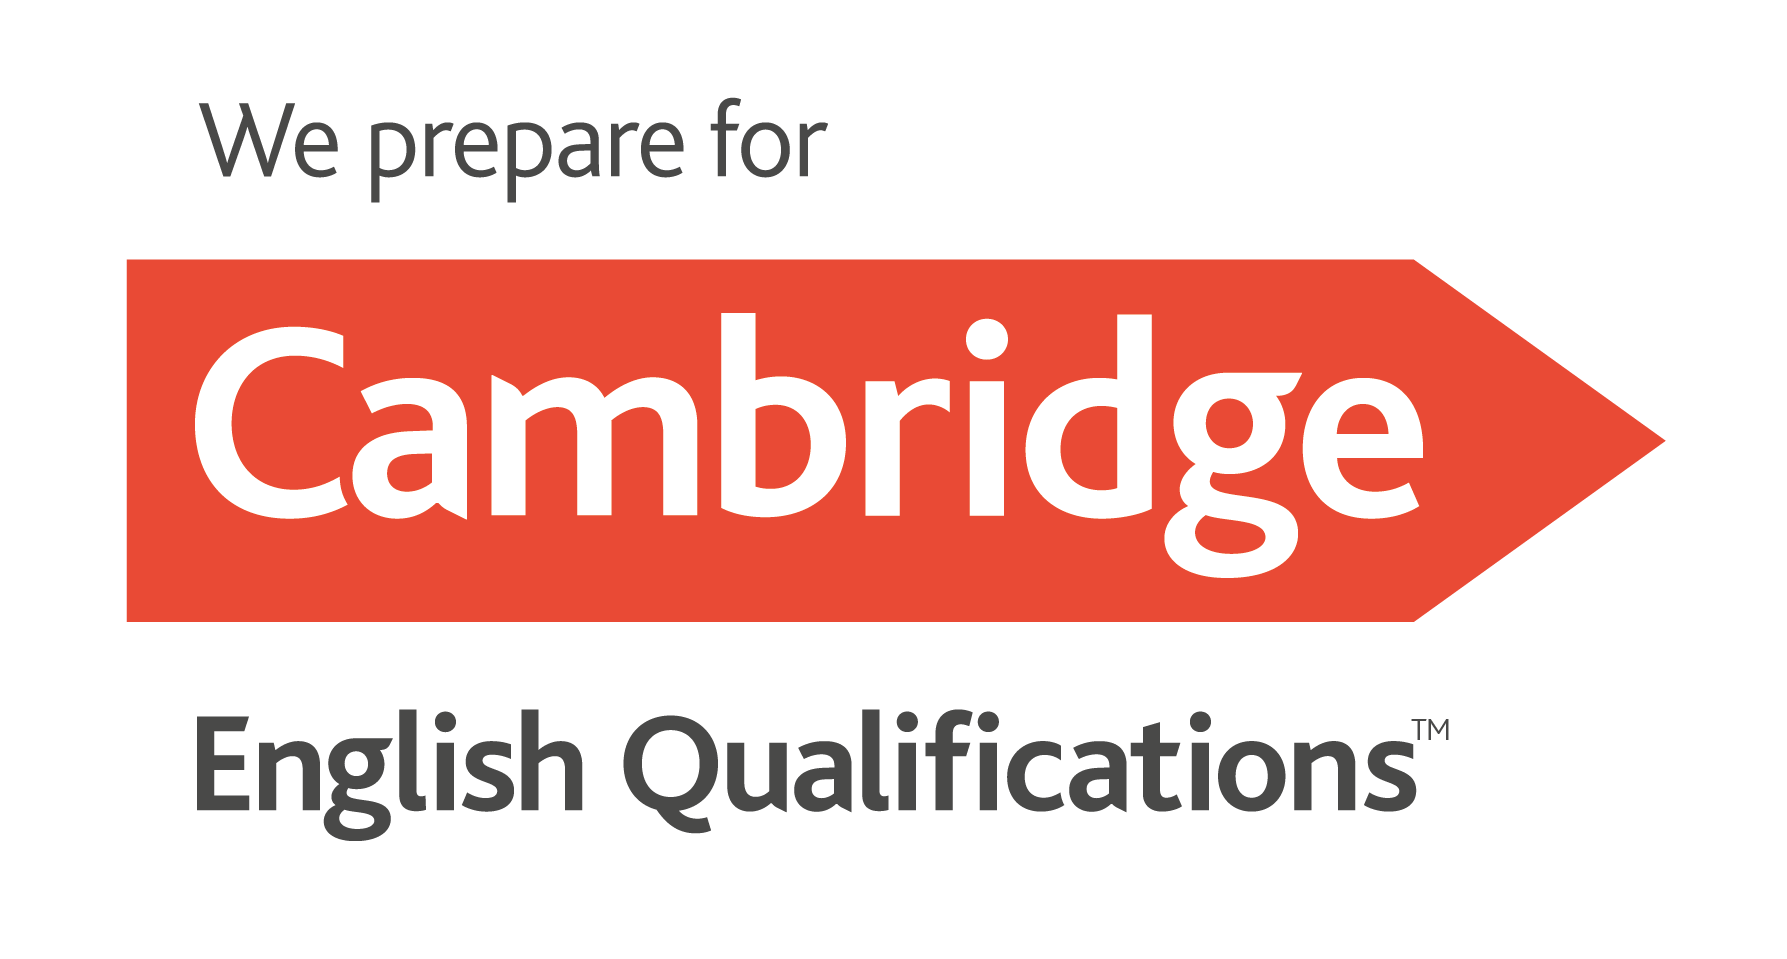 Https cambridge org. Кембридж лого. Cambridge Assessment лого. Кембриджские экзамены лого. Кембриджский университет лого.